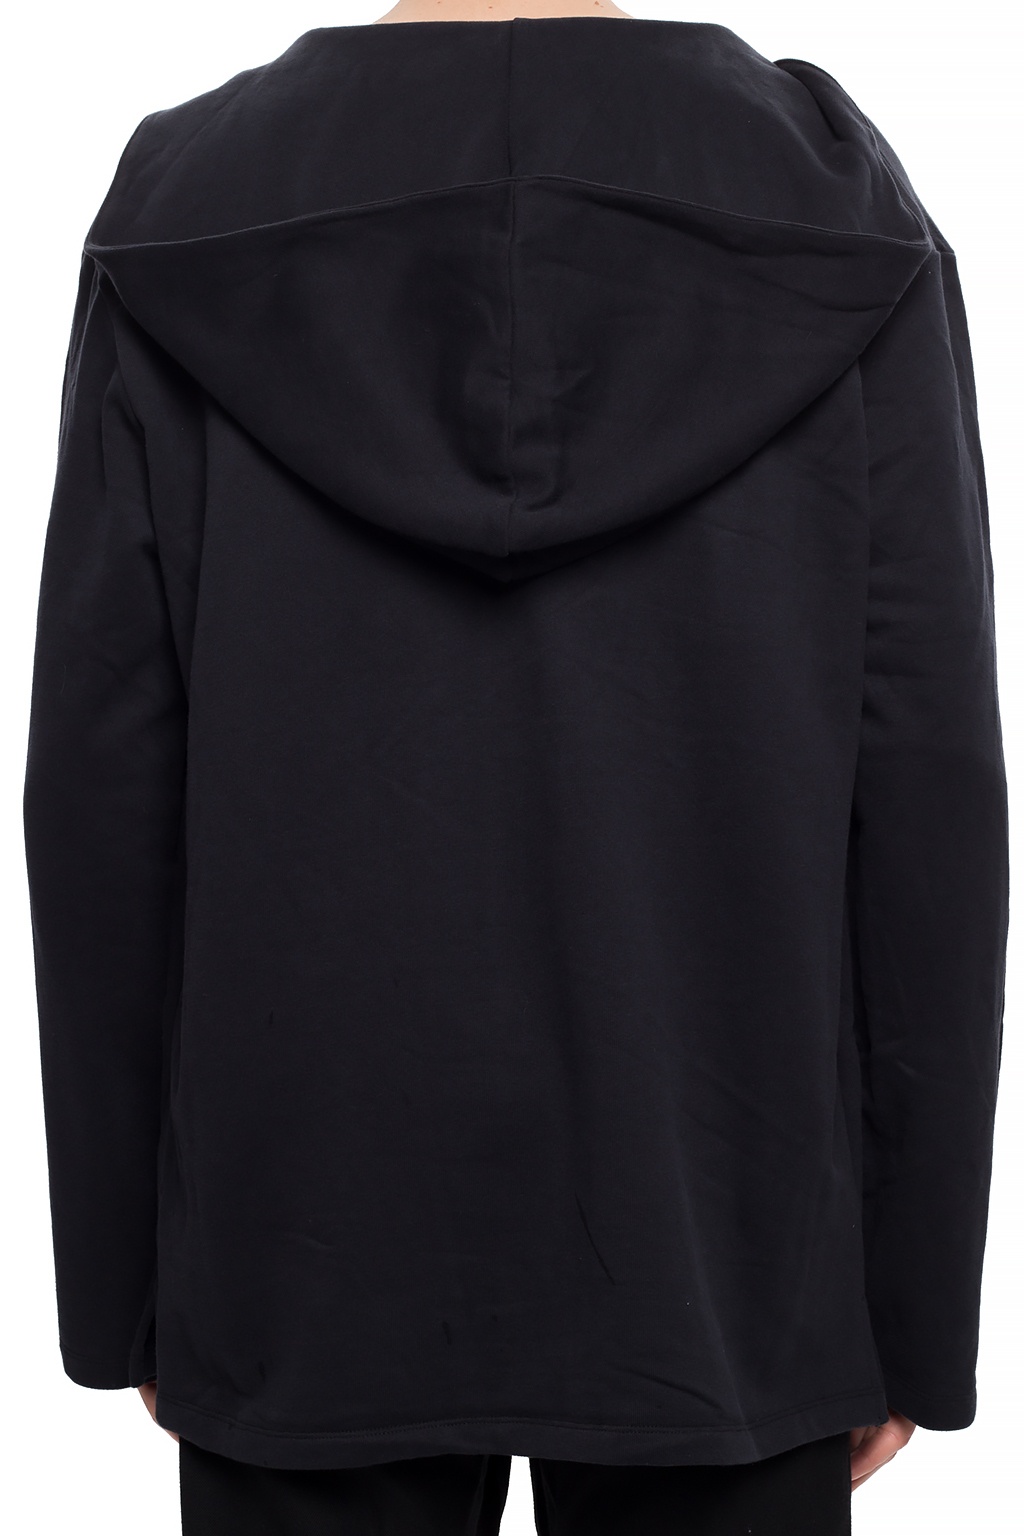 Hooded sweatshirt Ann Demeulemeester - Vitkac Australia